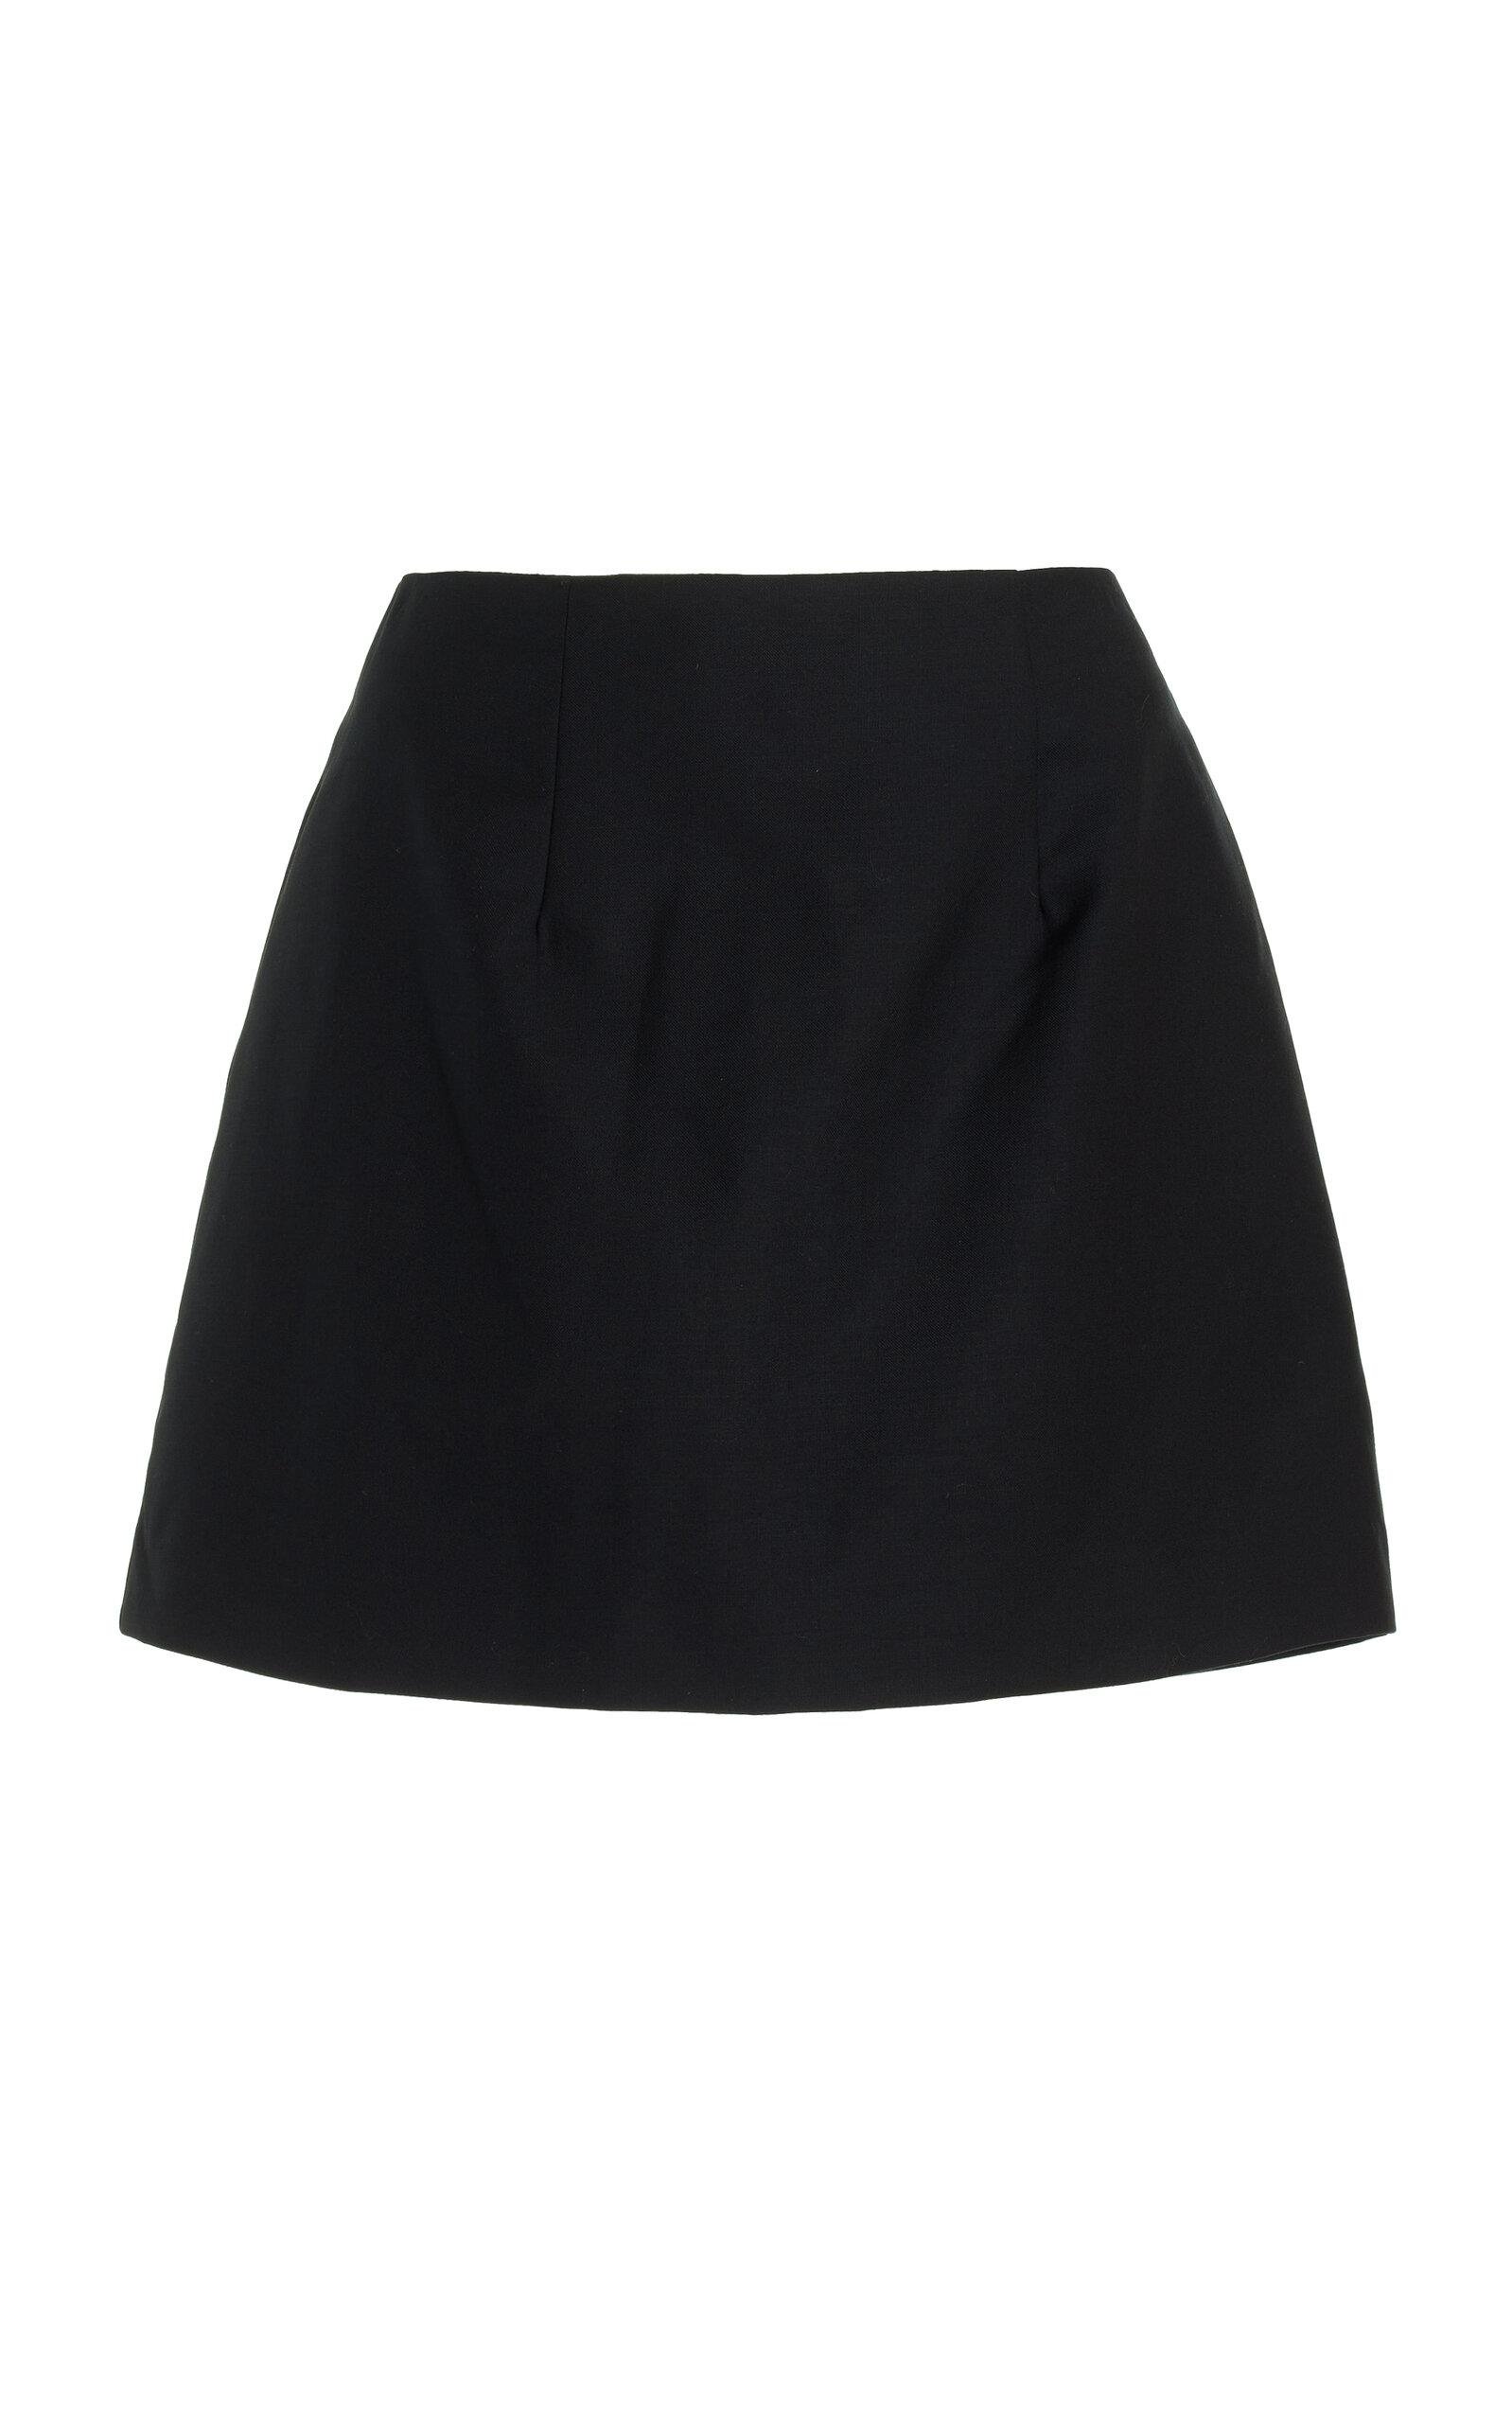 Beare Park - The Alexander Wool Mini Skirt - Black - AU 14 - Moda Operandi by BEARE PARK